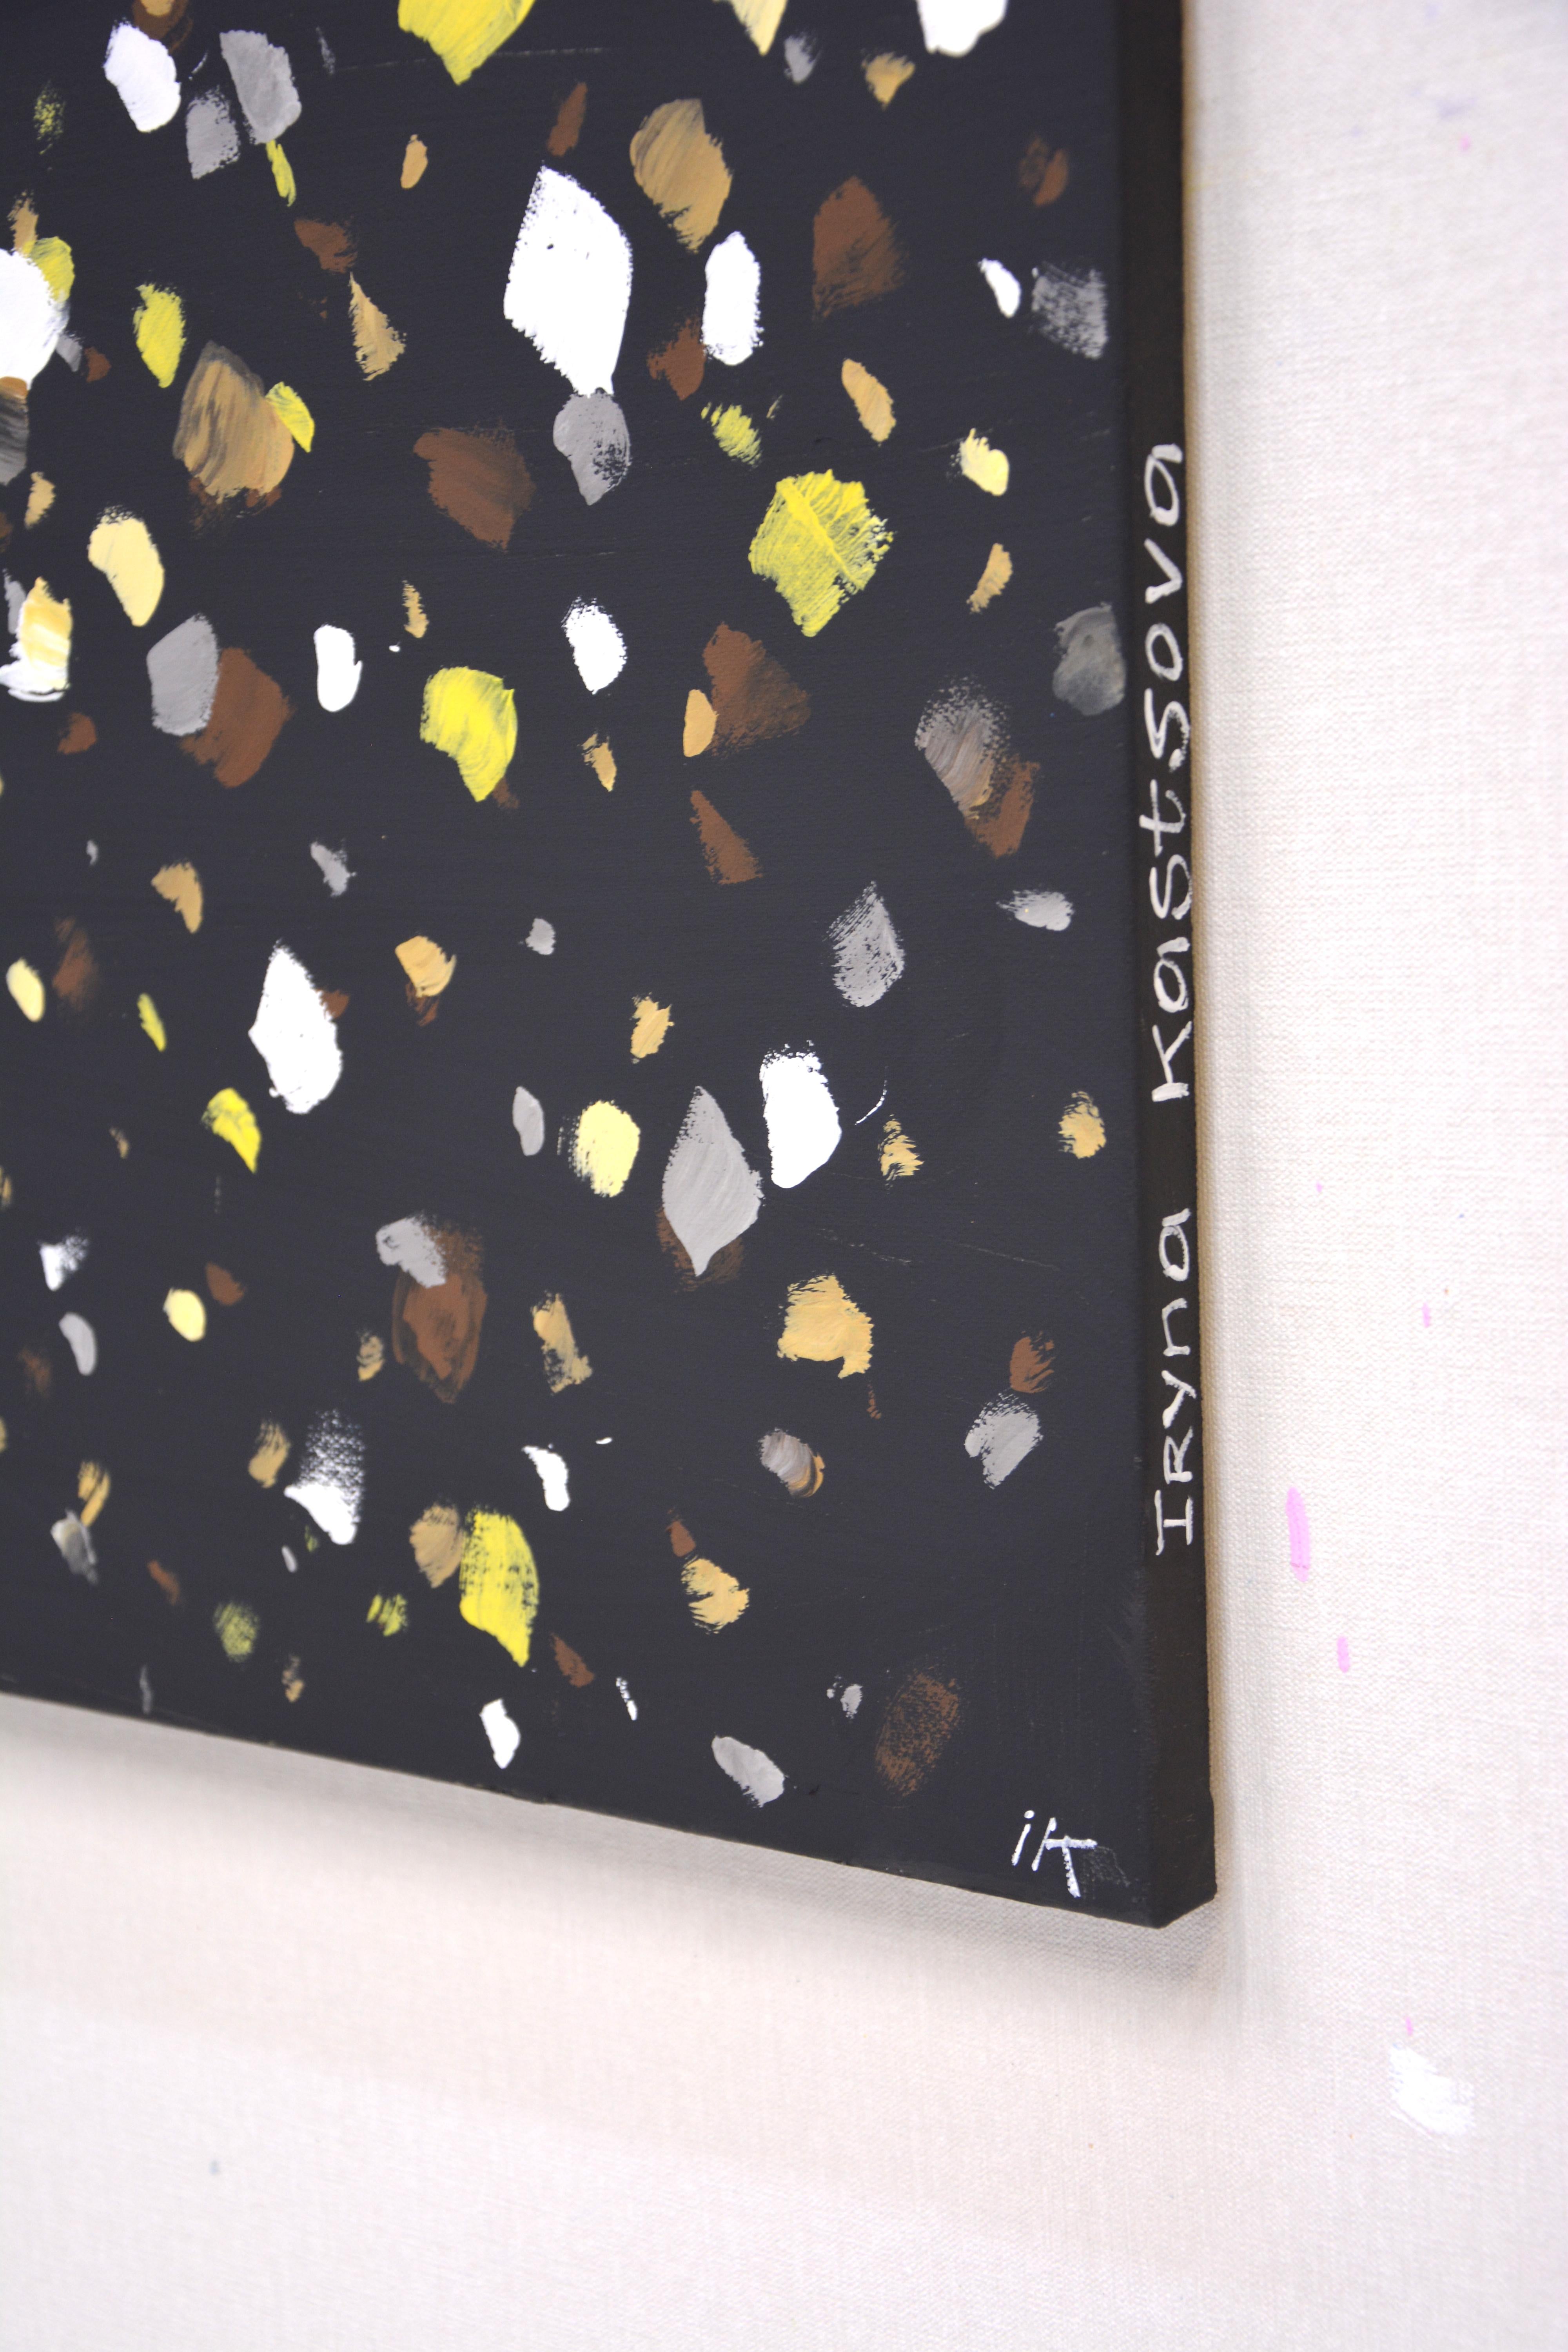 Poantillism. Glare. Interior Painting Modern Design with Black Gold Yellow Dots 2